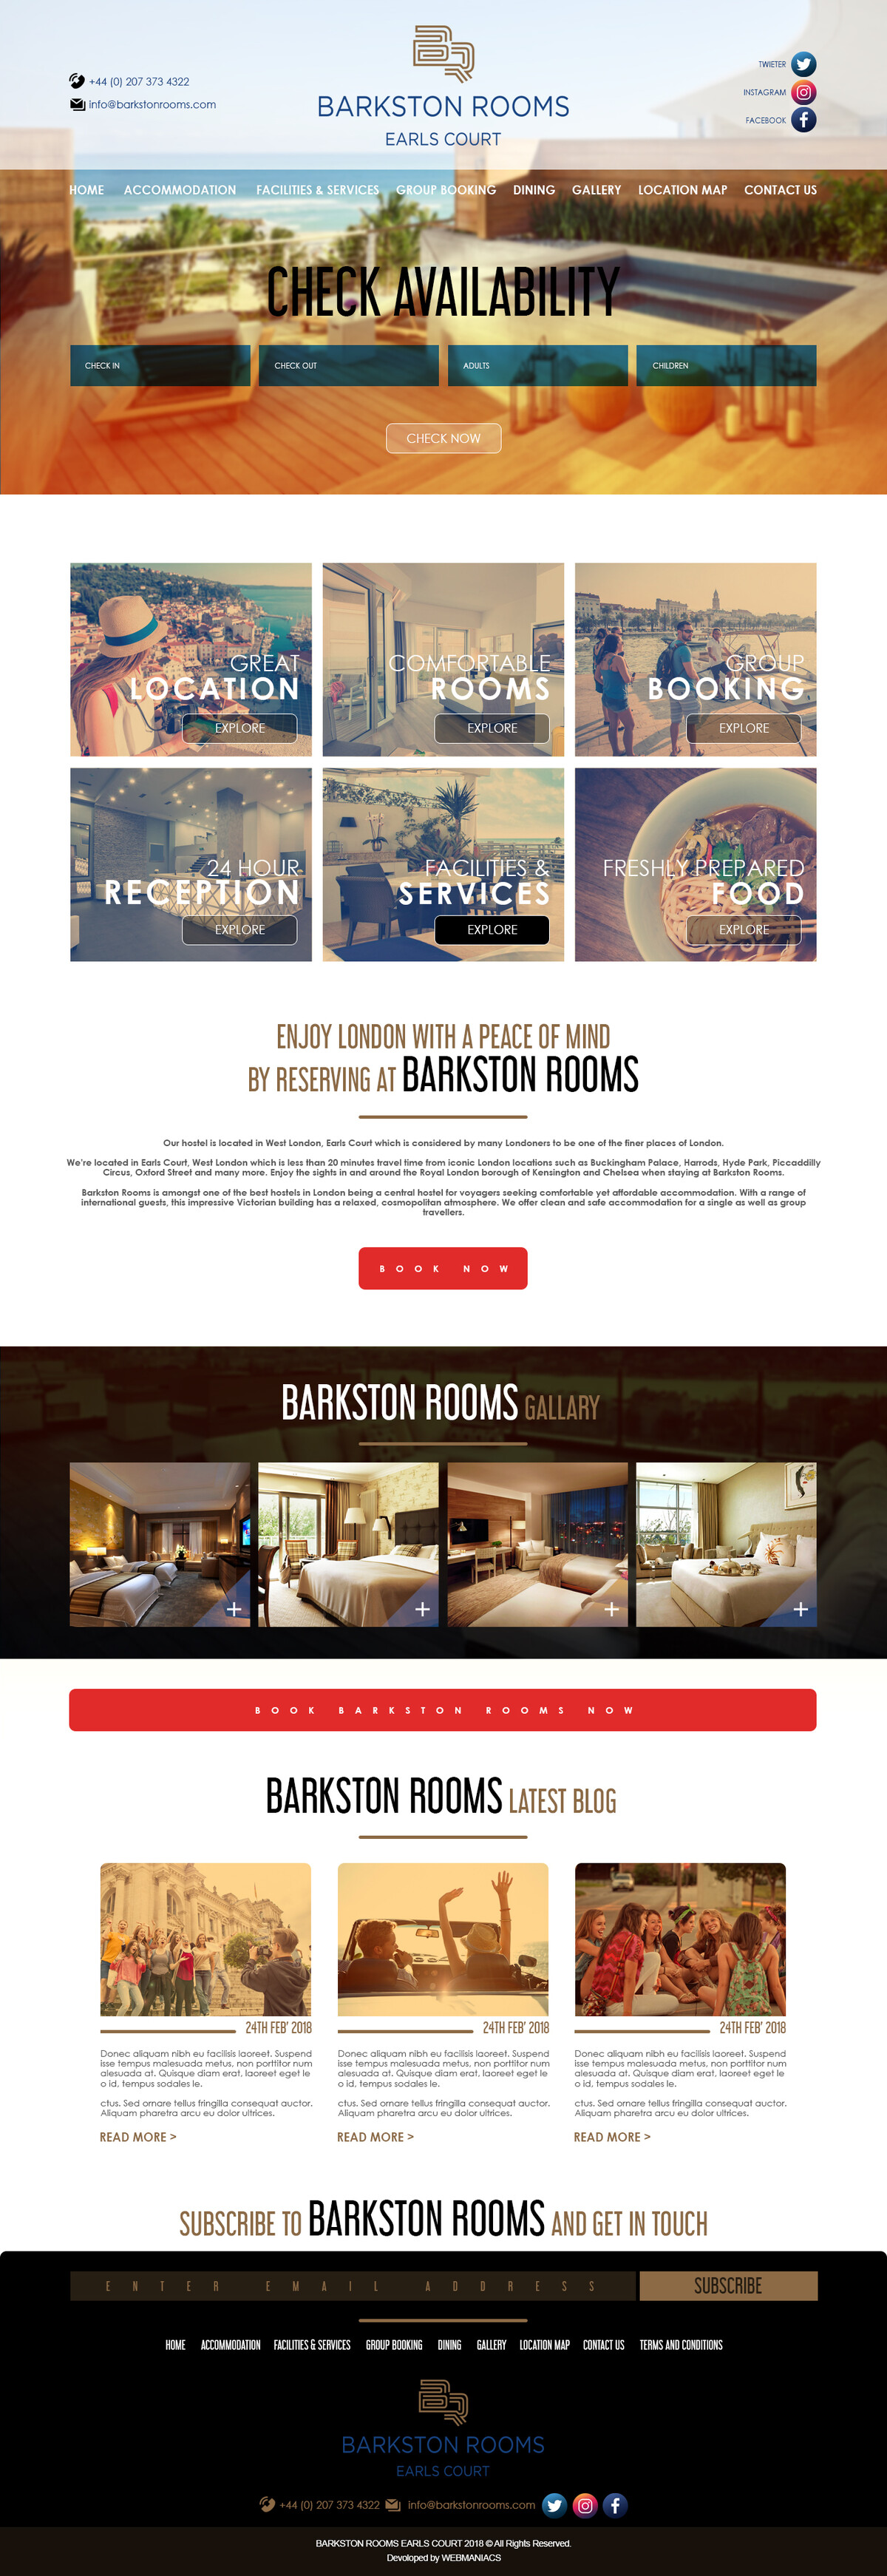 Design for a website of a hotel